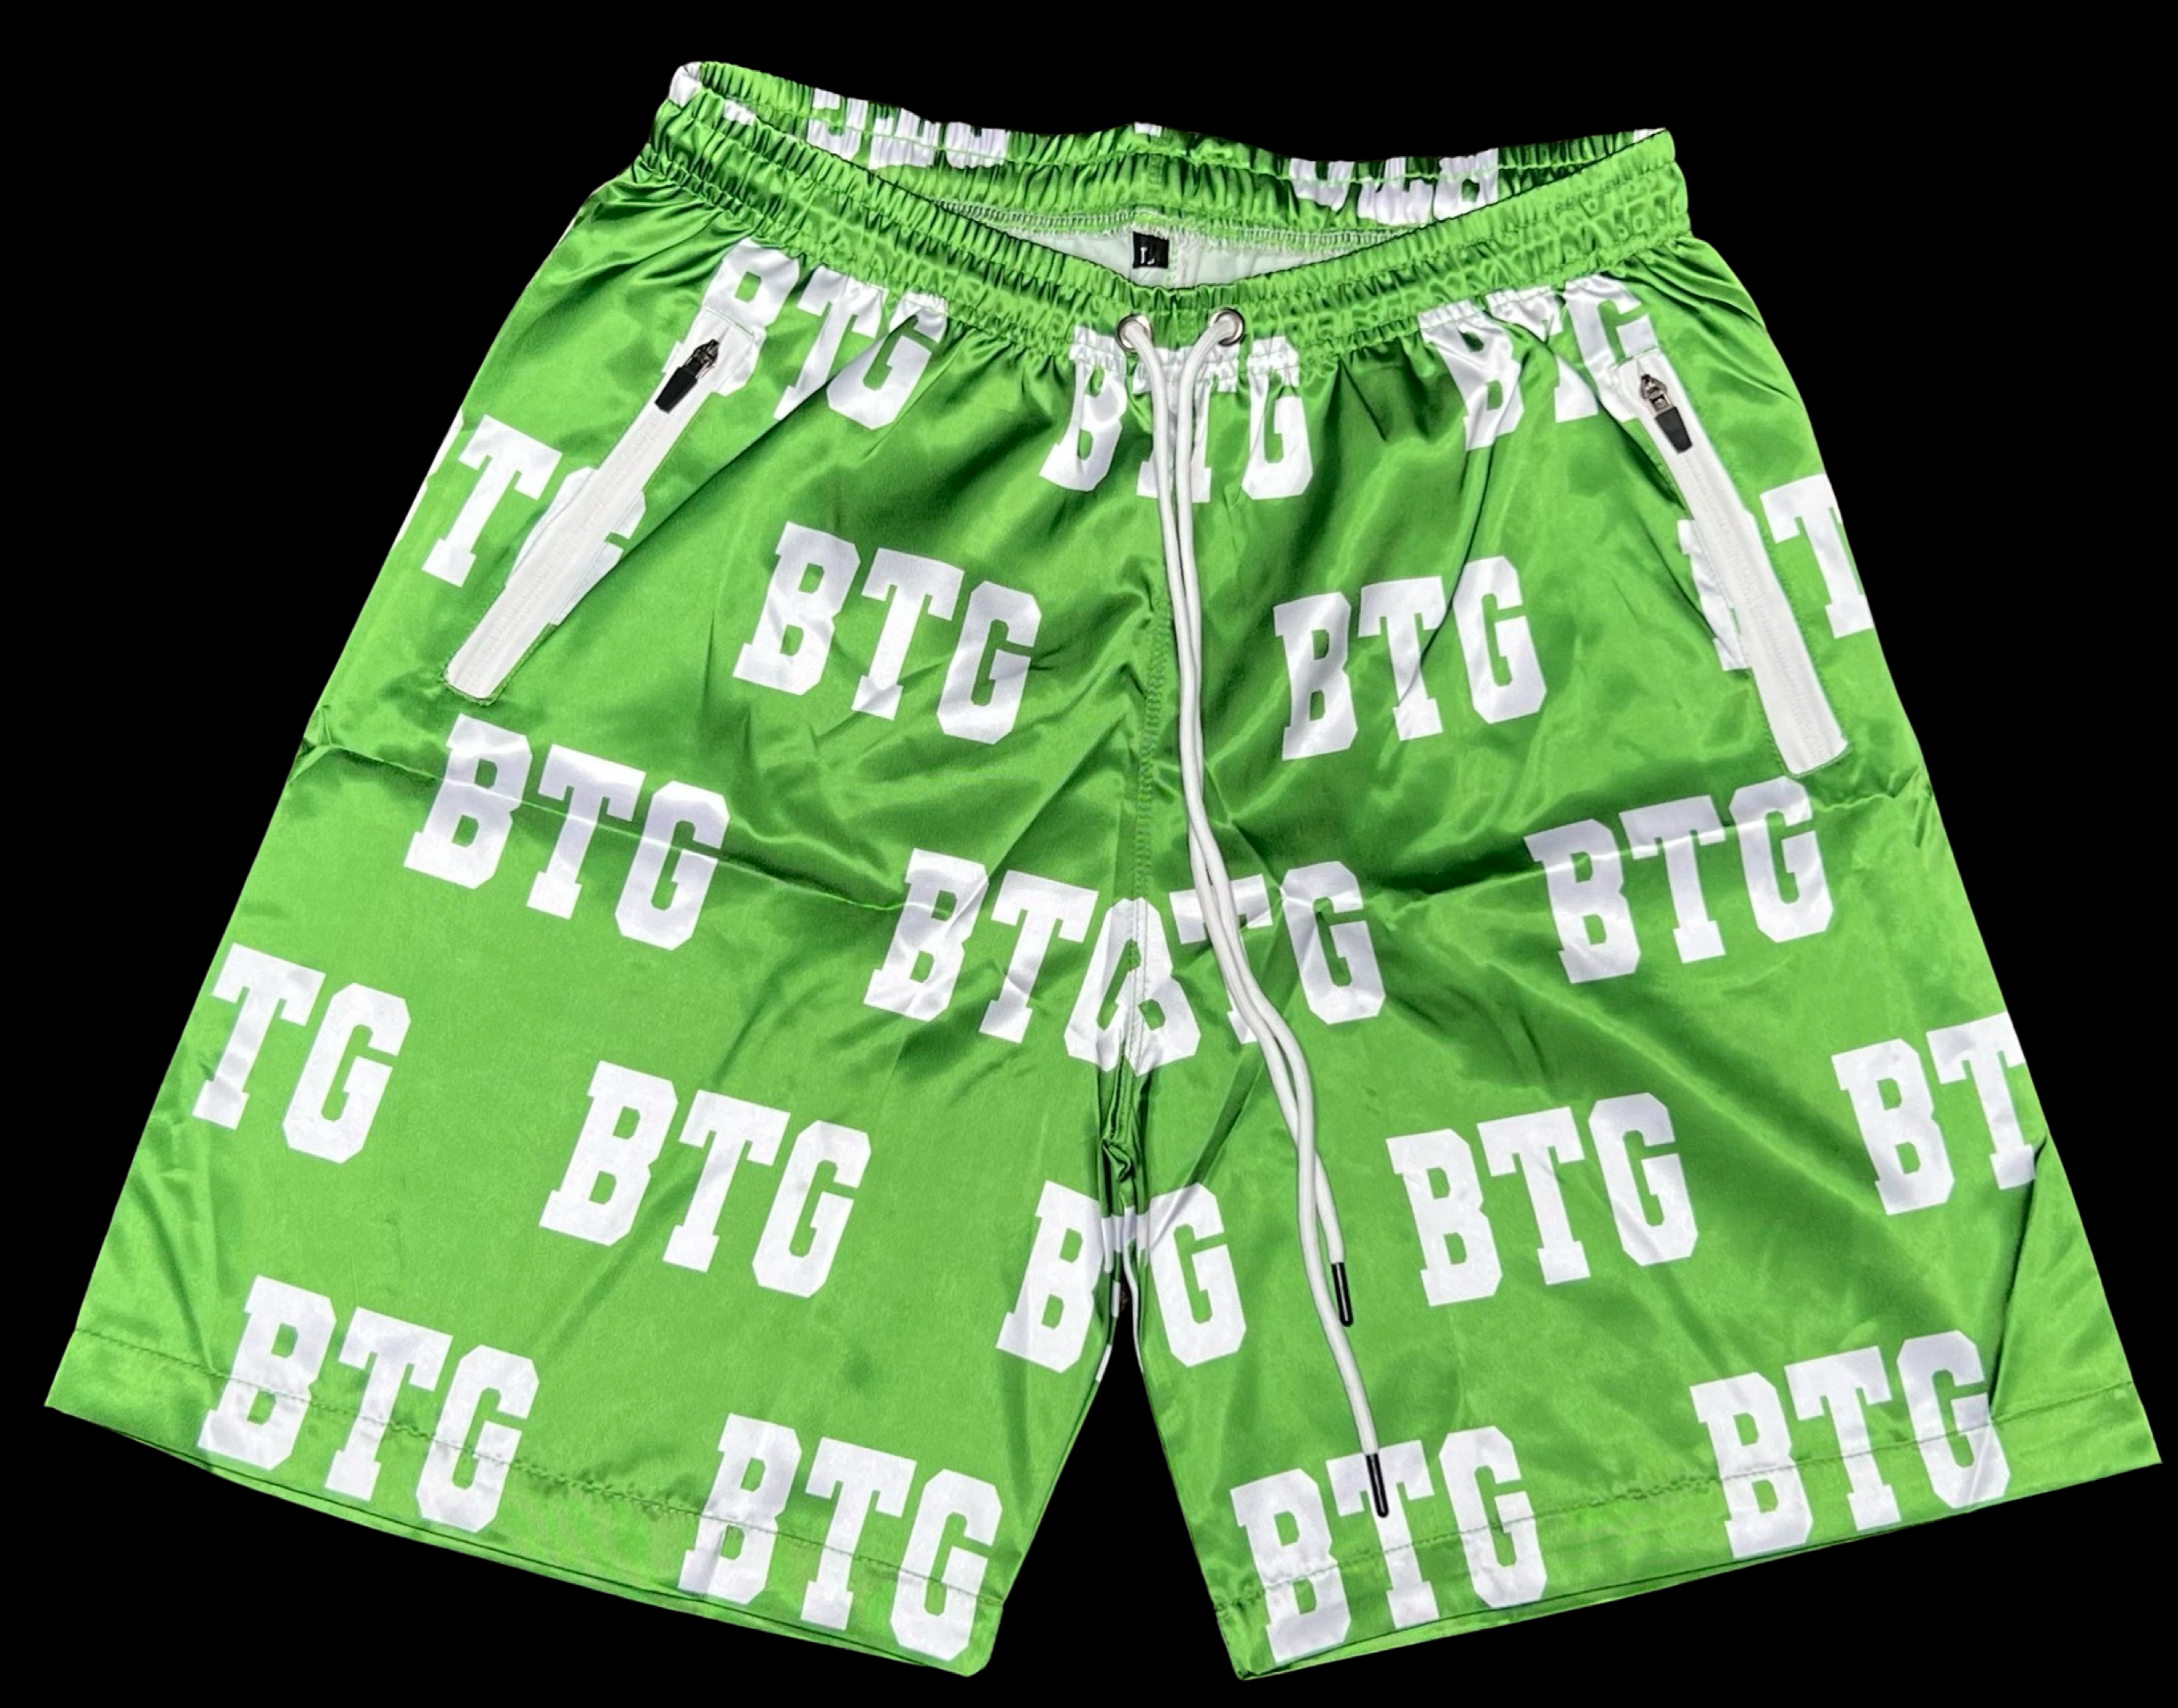 BTG Green Silky Shorts